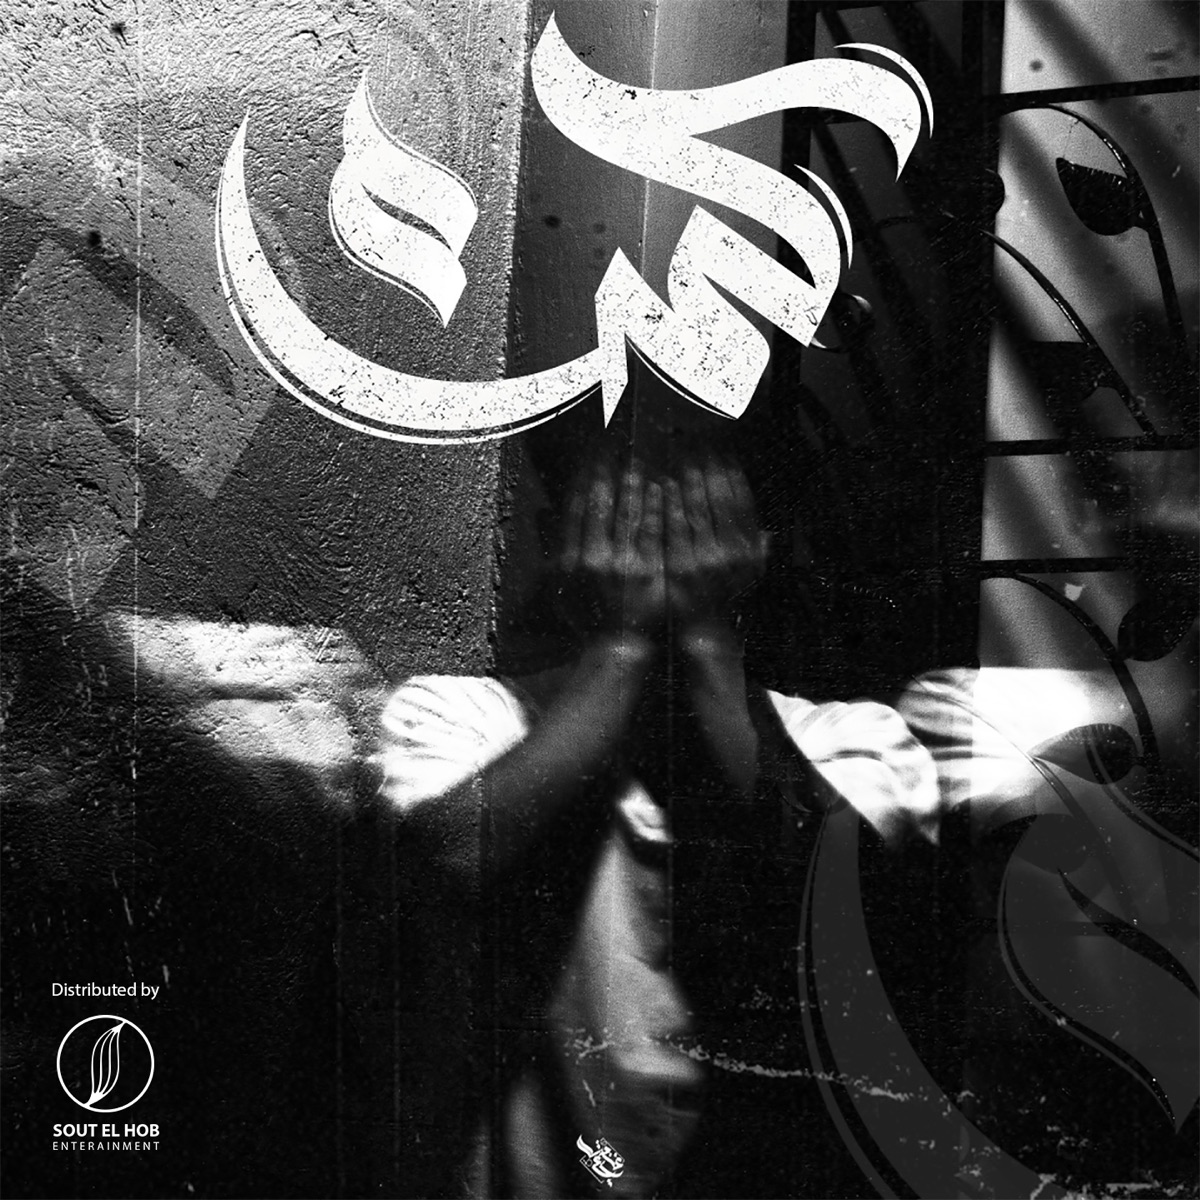 Sinario - Single - Album by Kareem Khaled Skaar - Apple Music